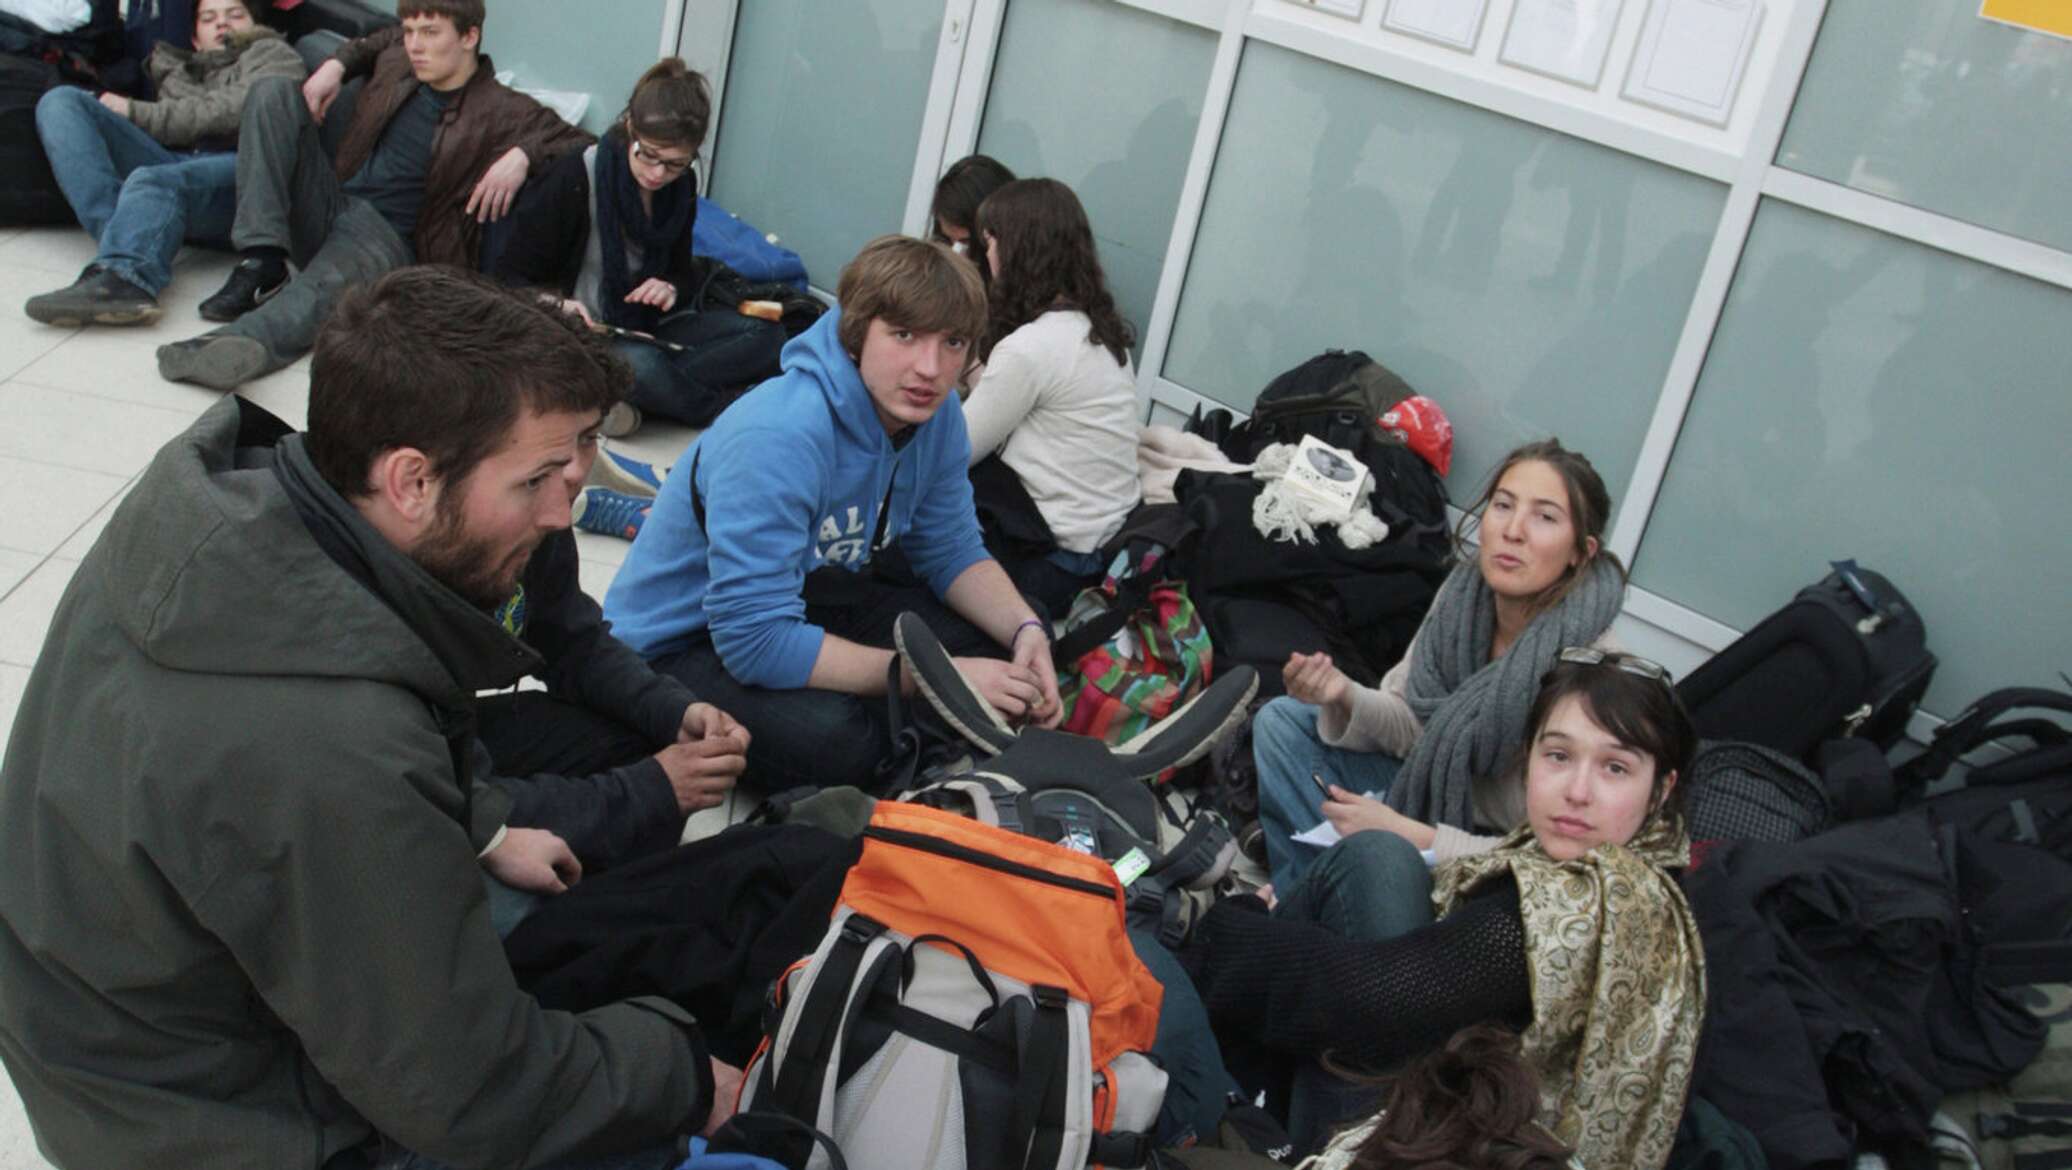 Домодедово аэропорт таджики уезжают. Граждан Таджикистана в аэропорт. Таджики в российских аэропортах. Таджики в аэропорту. Очередь на посадку в аэропорту.